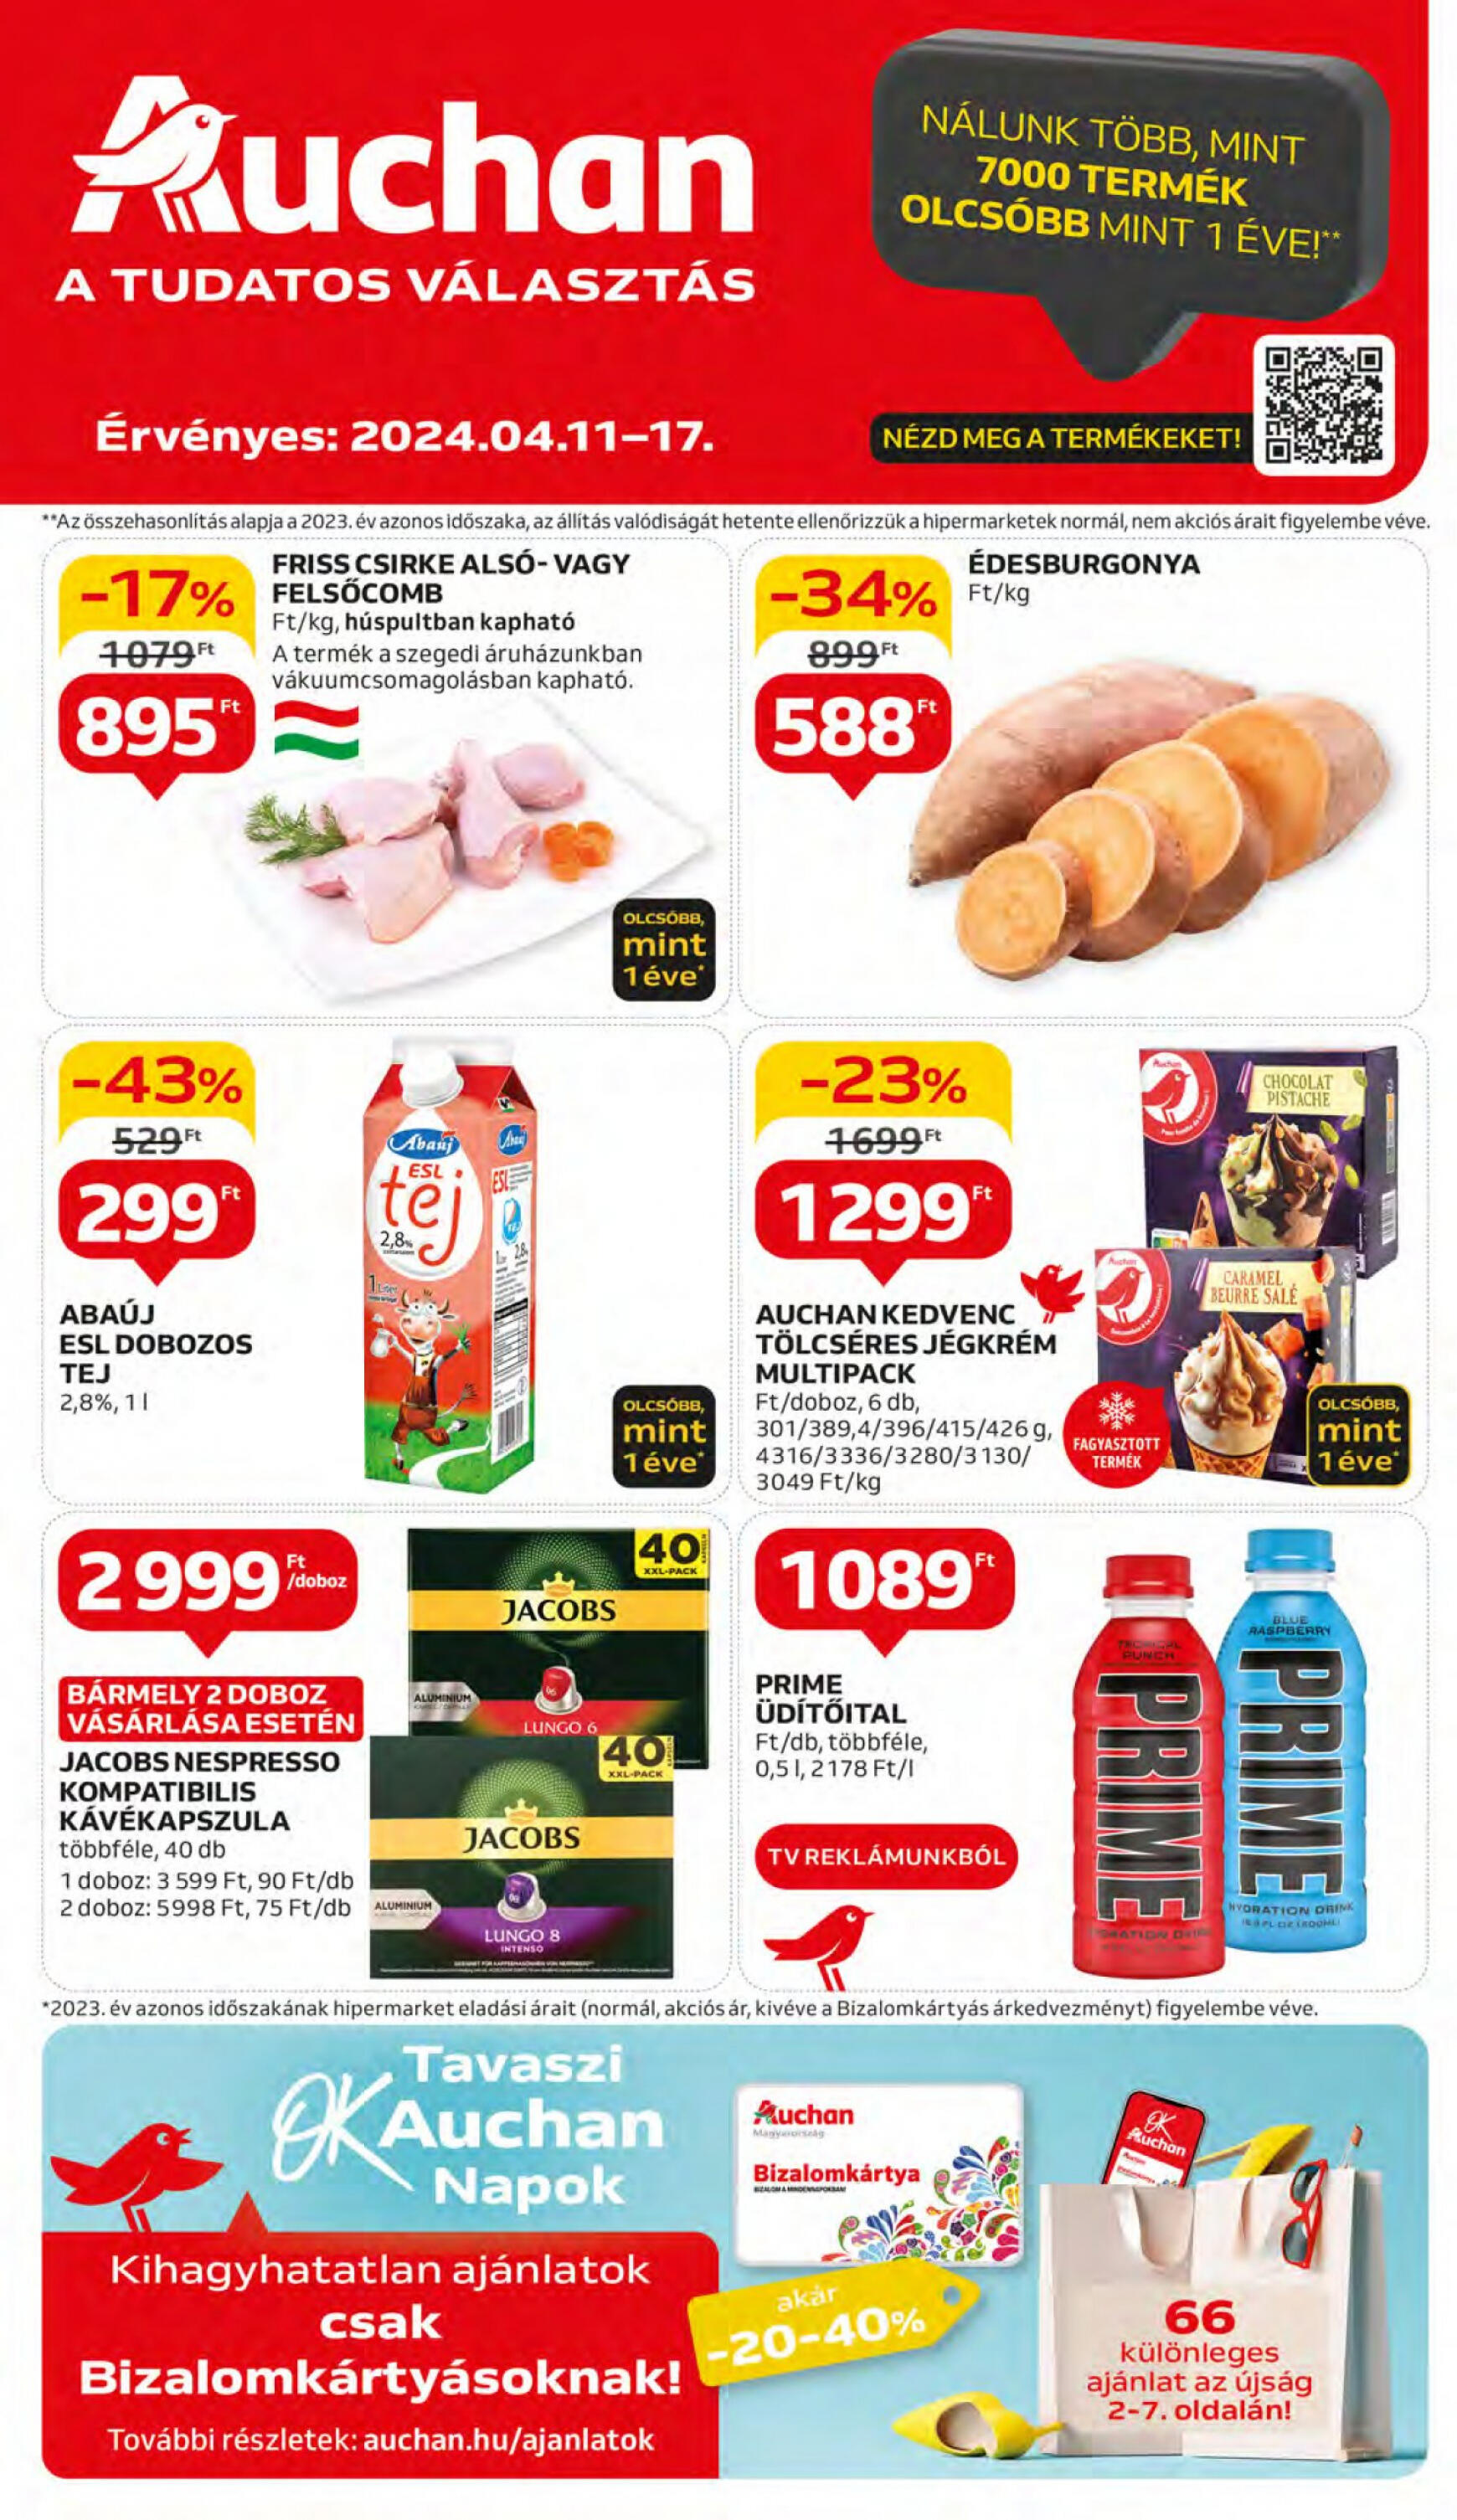 auchan - Aktuális újság Auchan 04.11. - 04.17. - page: 1